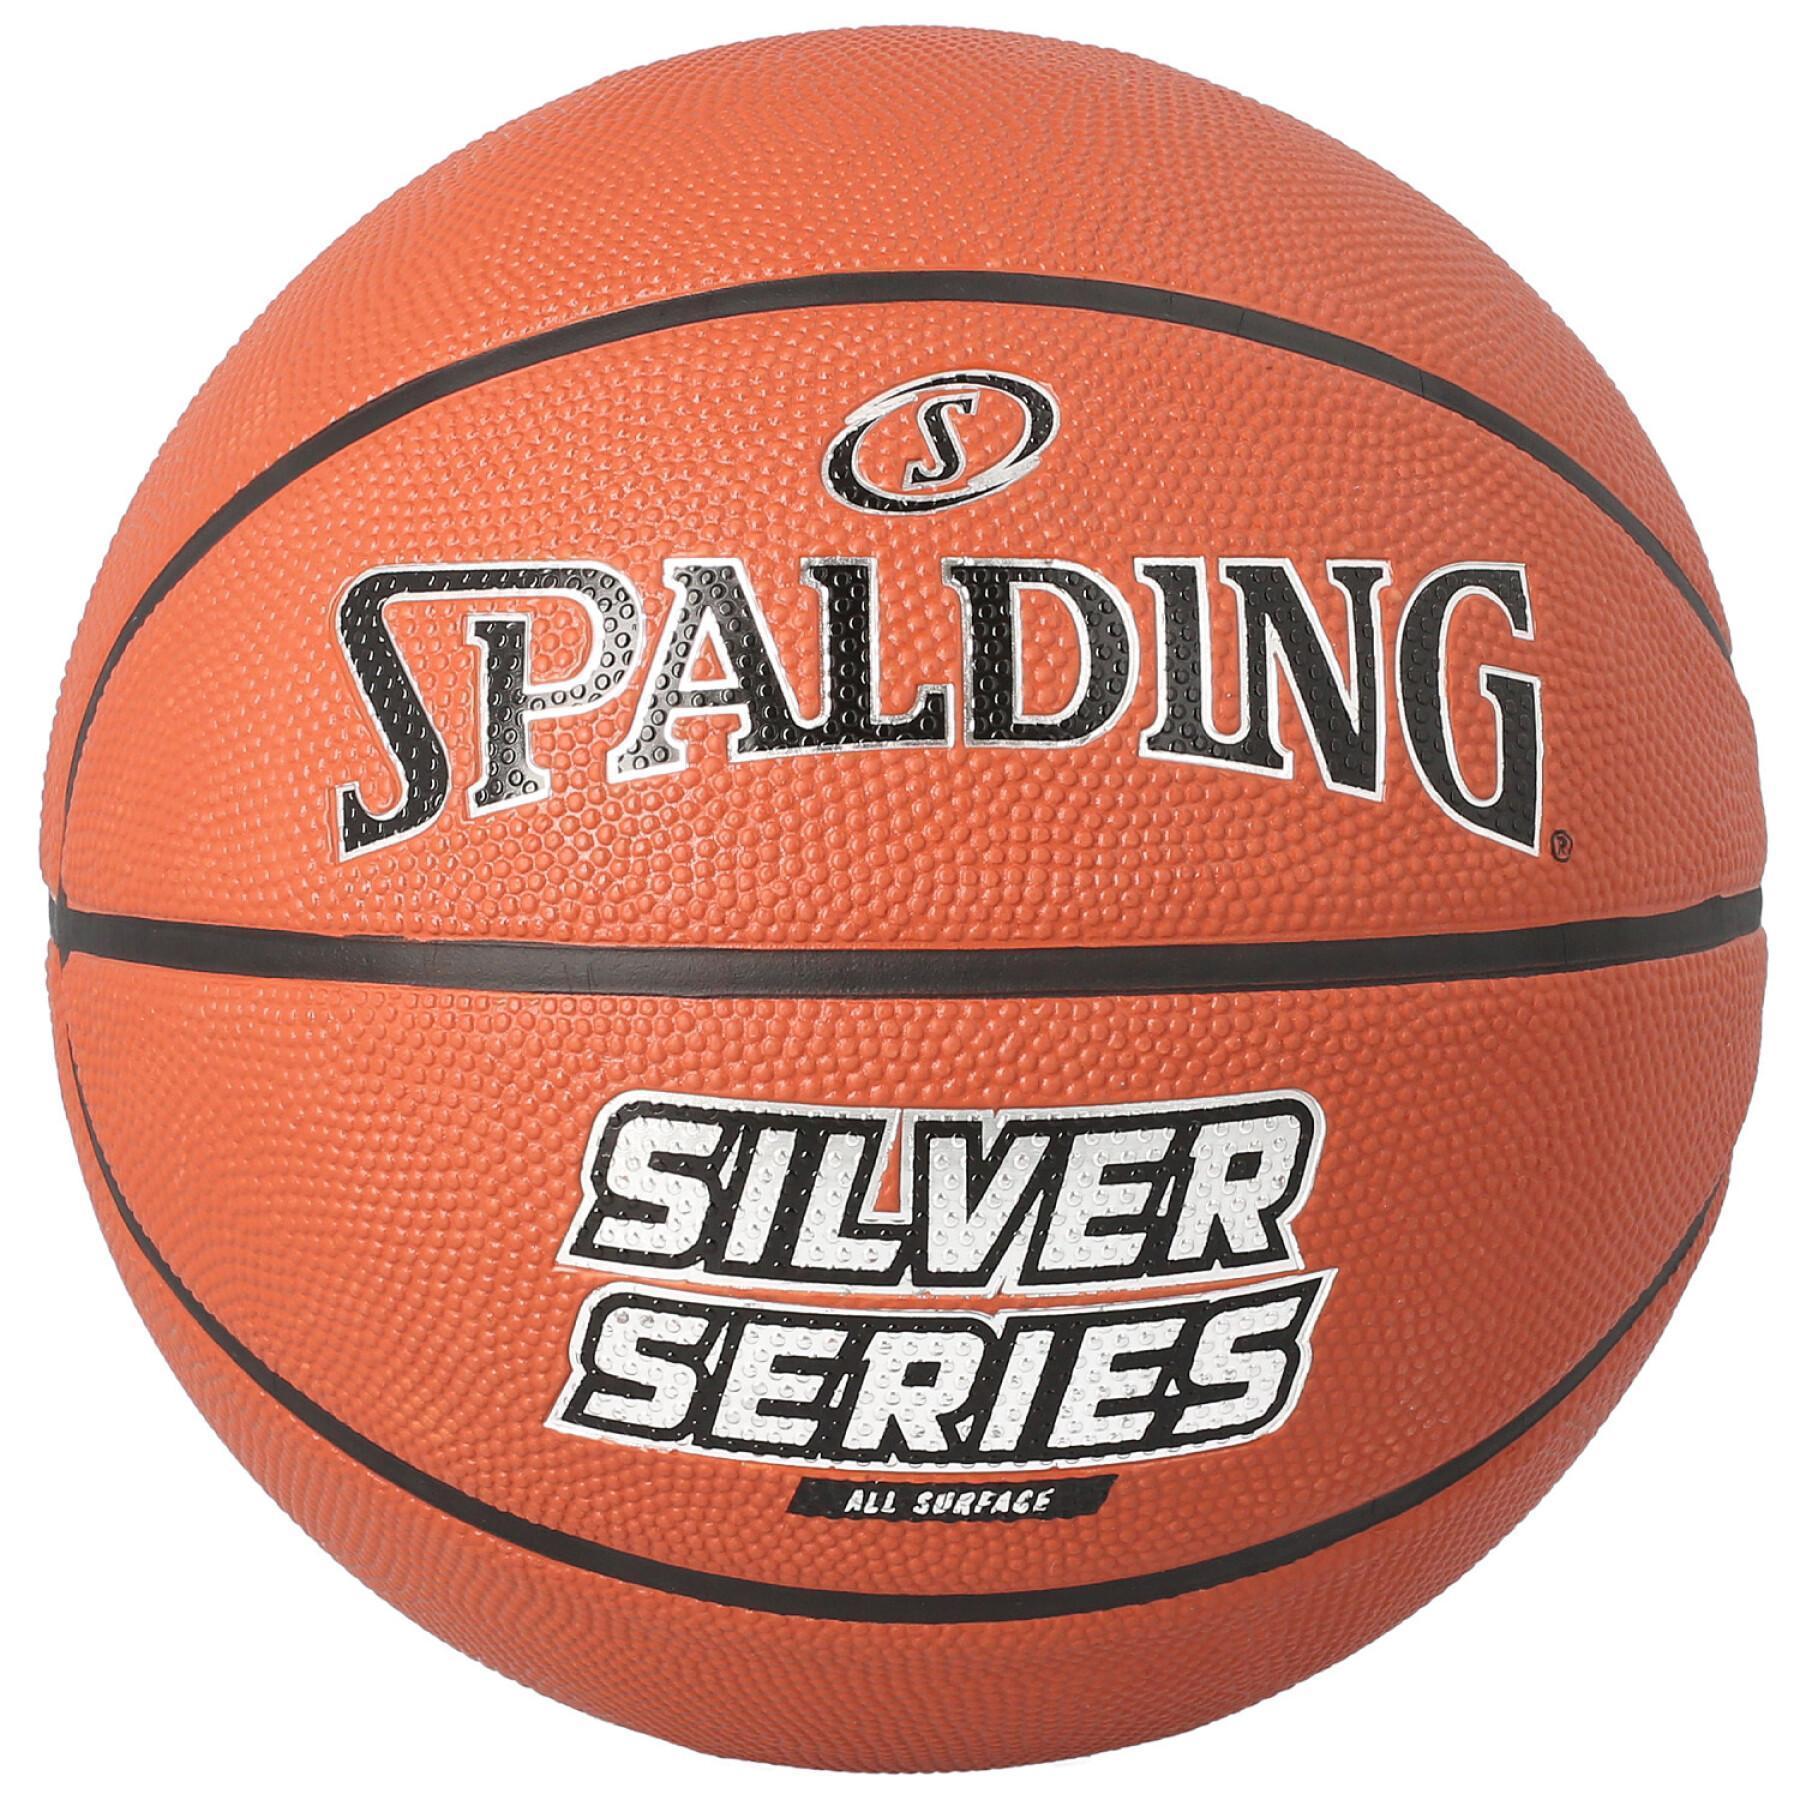 Pallone Spalding Silver Series Rubber